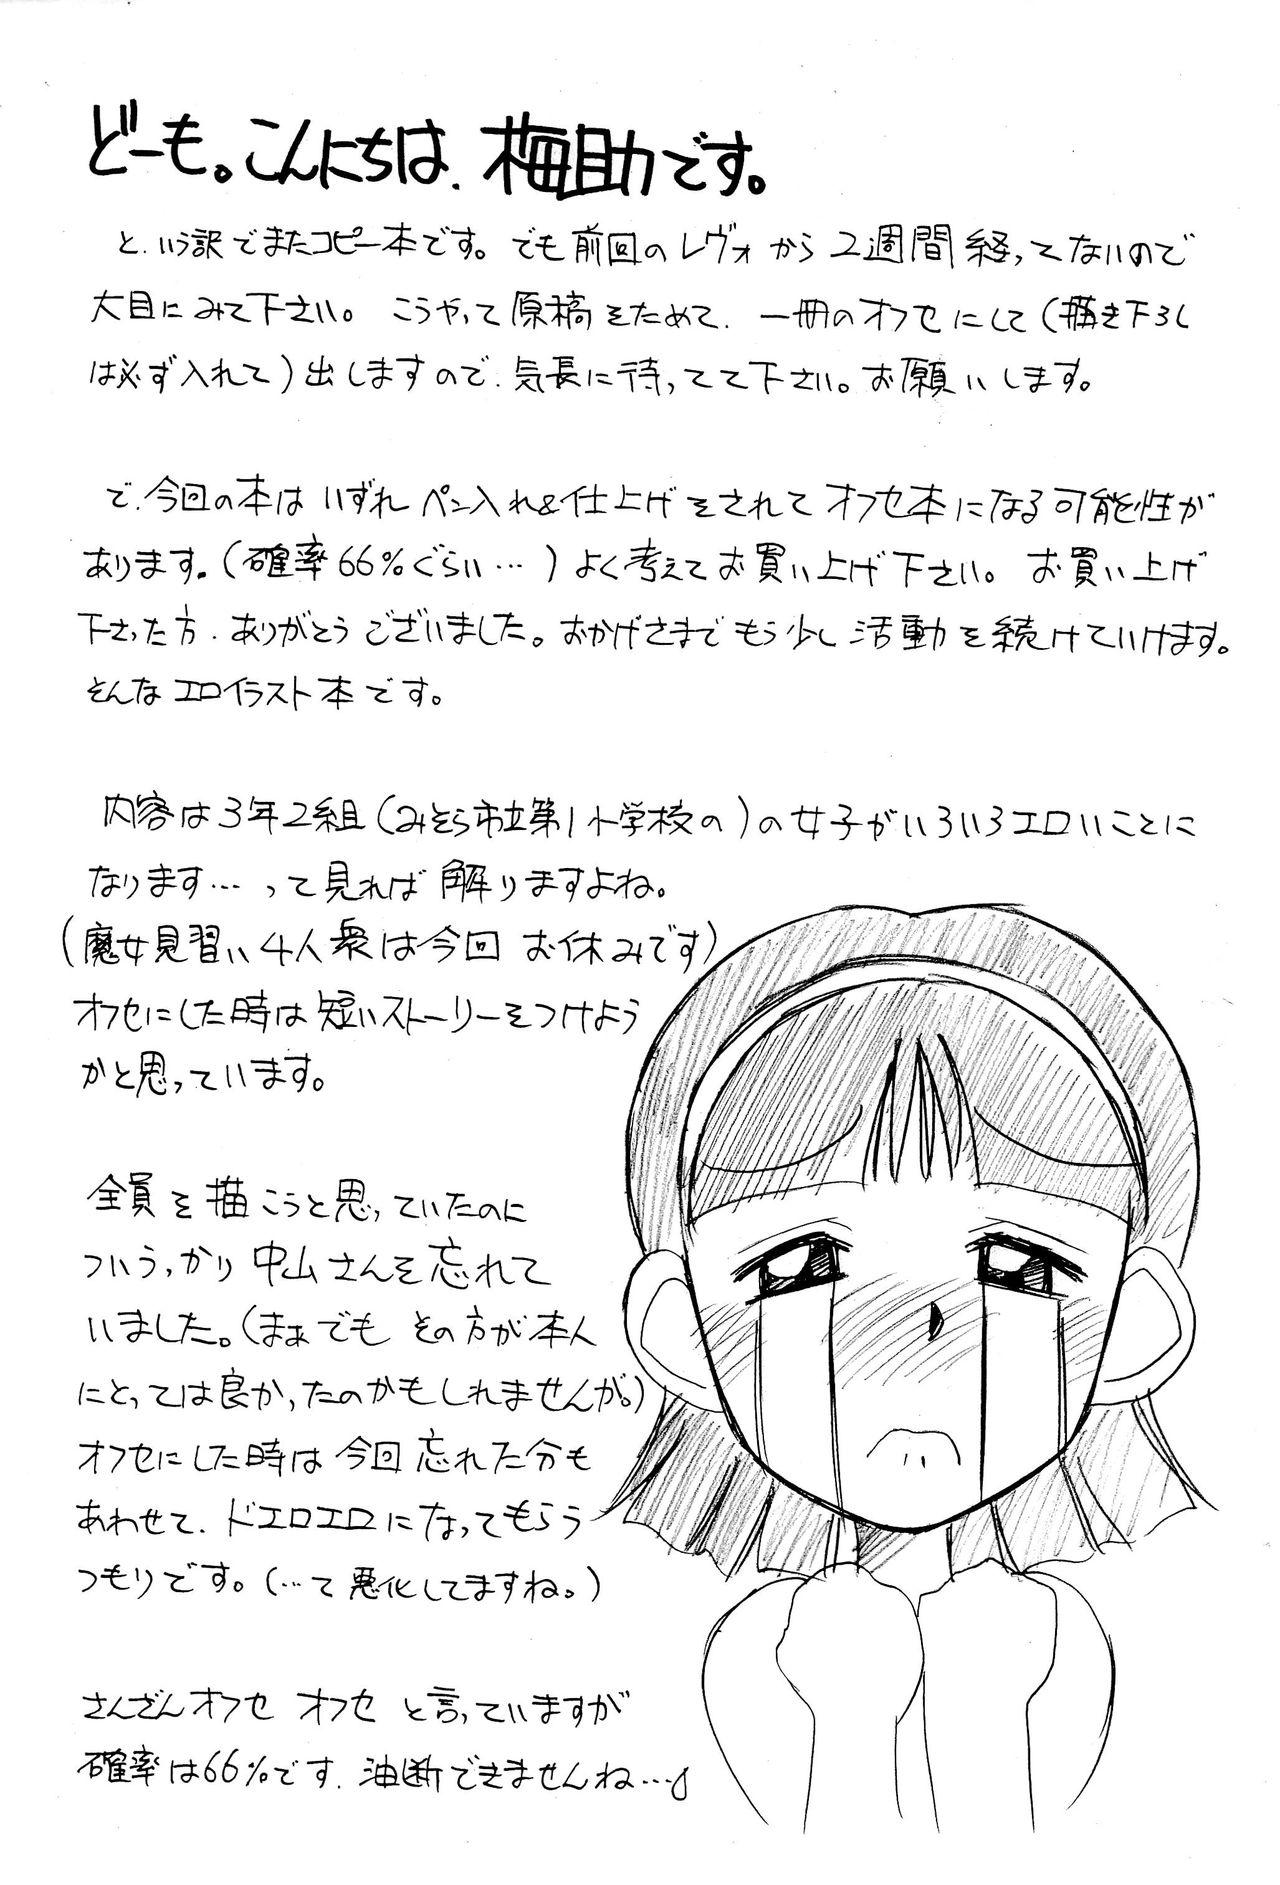 Sapphic 3 no 2 EROTICA CLASS - Ojamajo doremi Family - Page 2